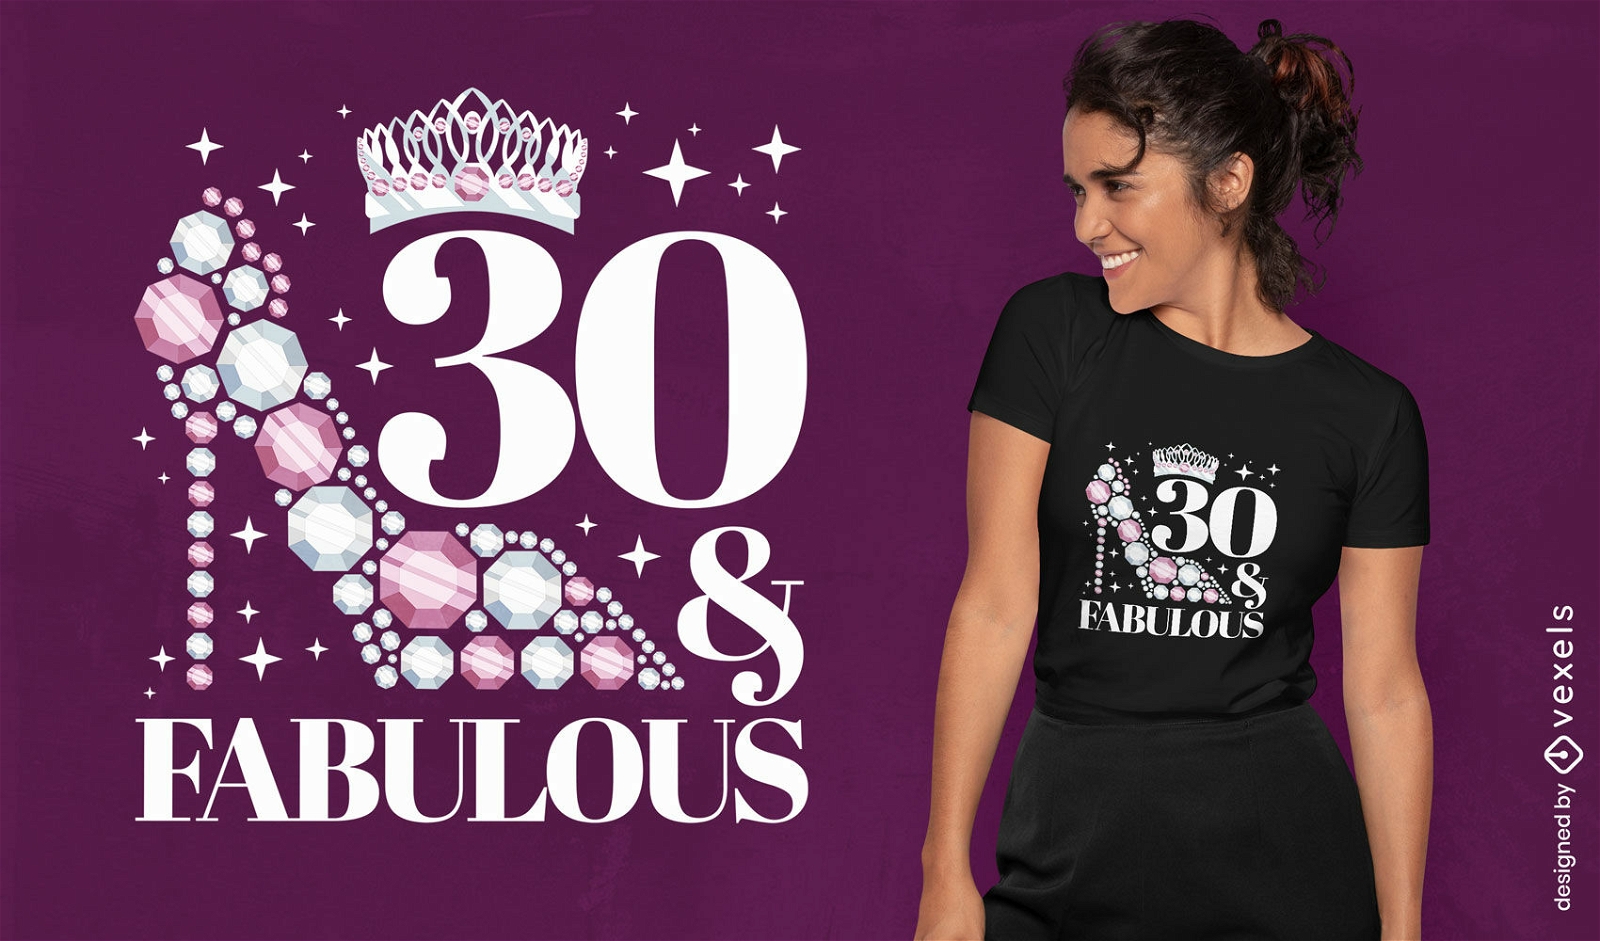 Fabulous 30 birthday t-shirt design 